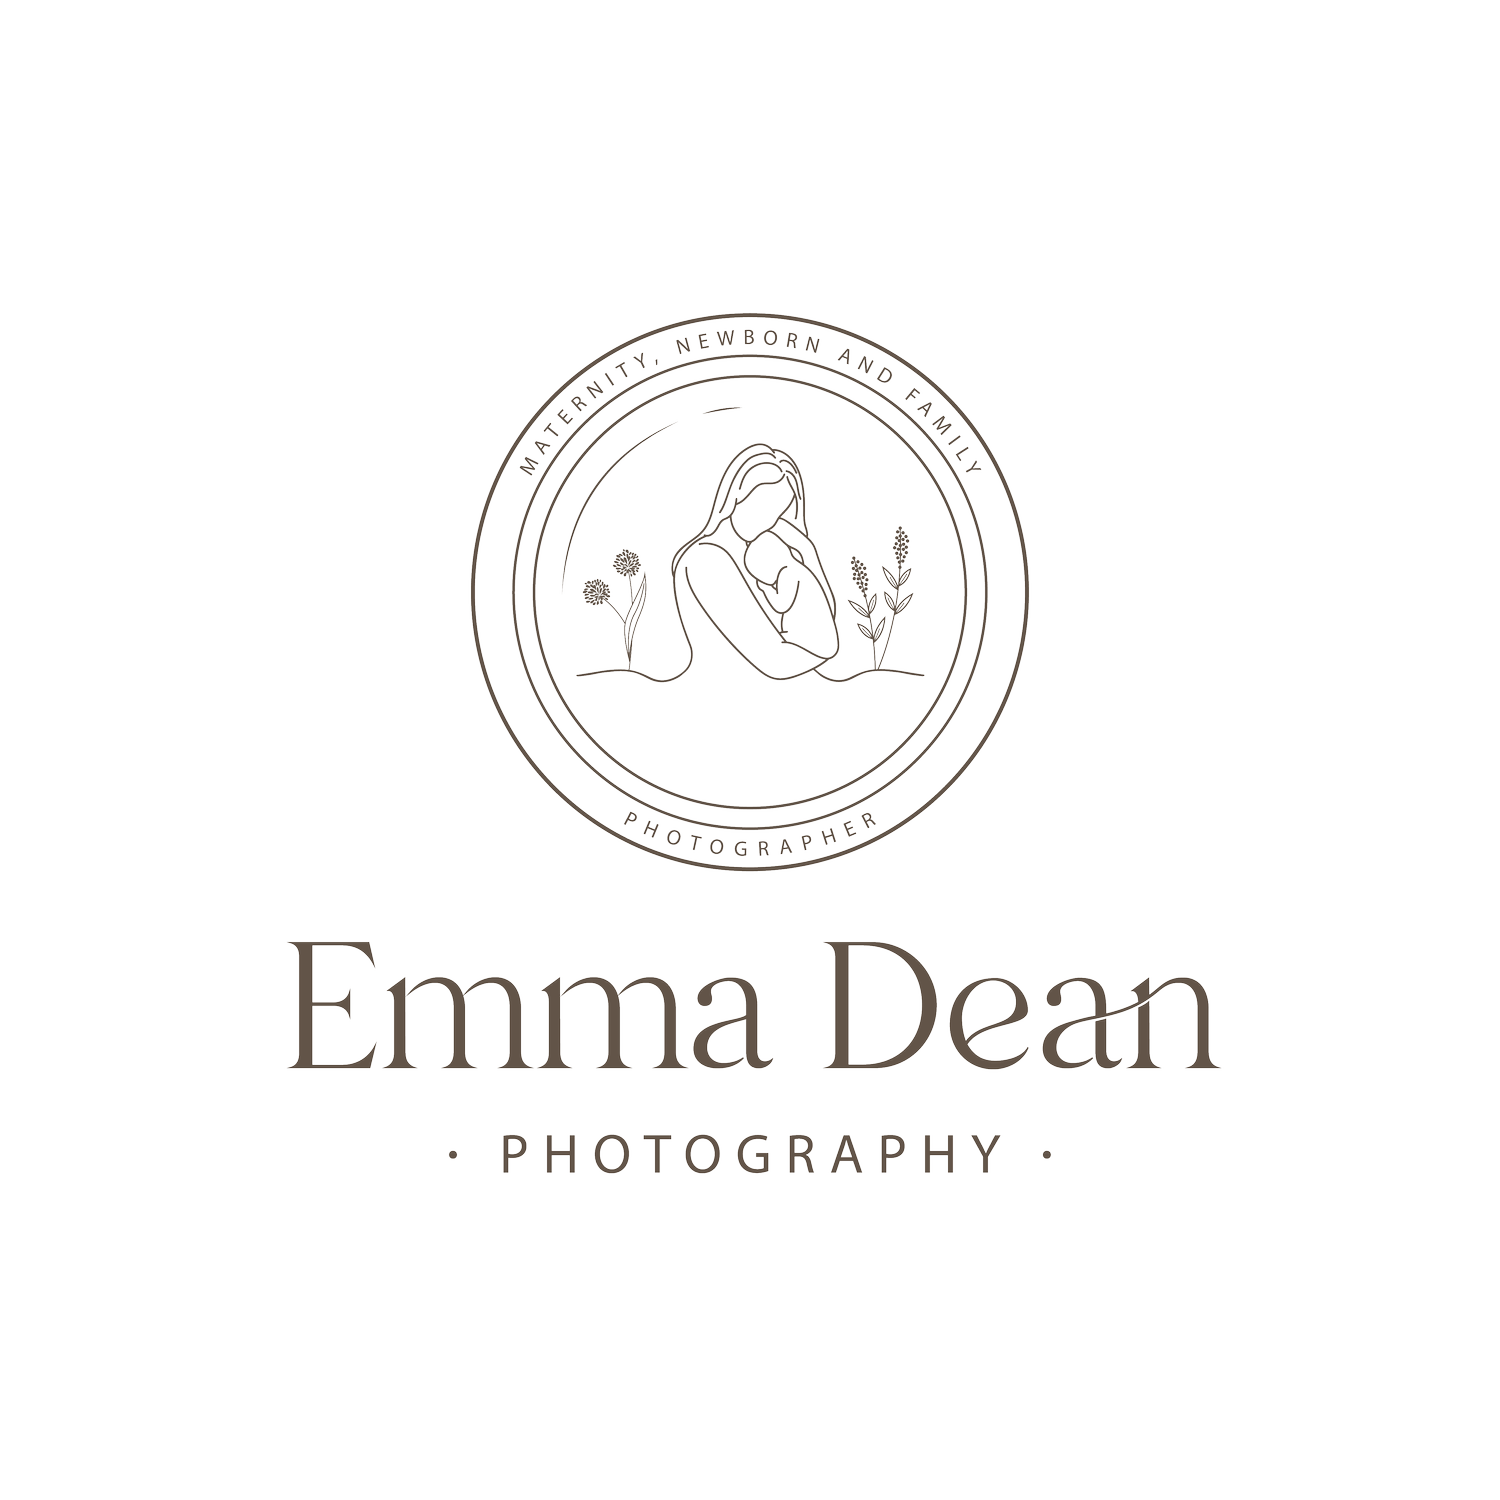 EMMA DEAN PHOTOGRAPHY